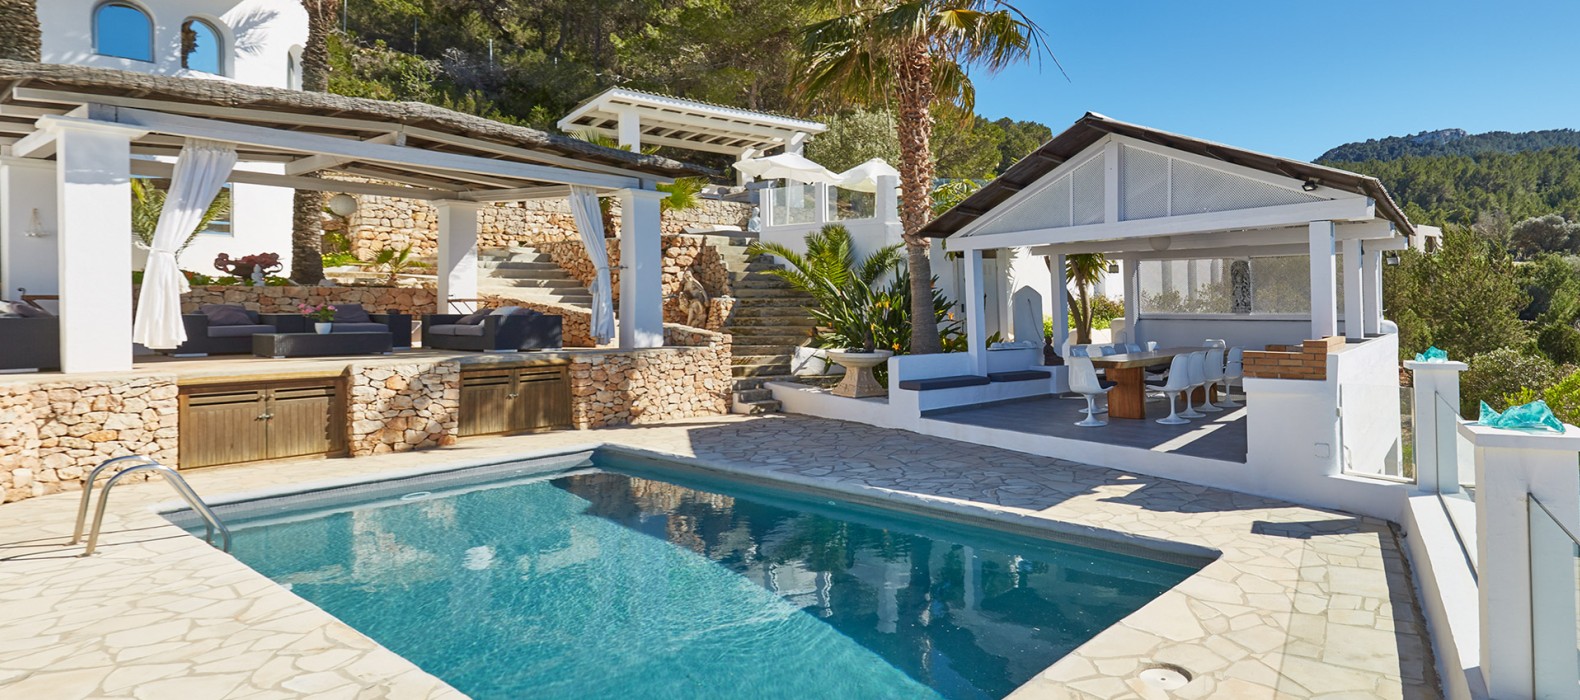 Exterior area of Villa Monterra in Ibiza